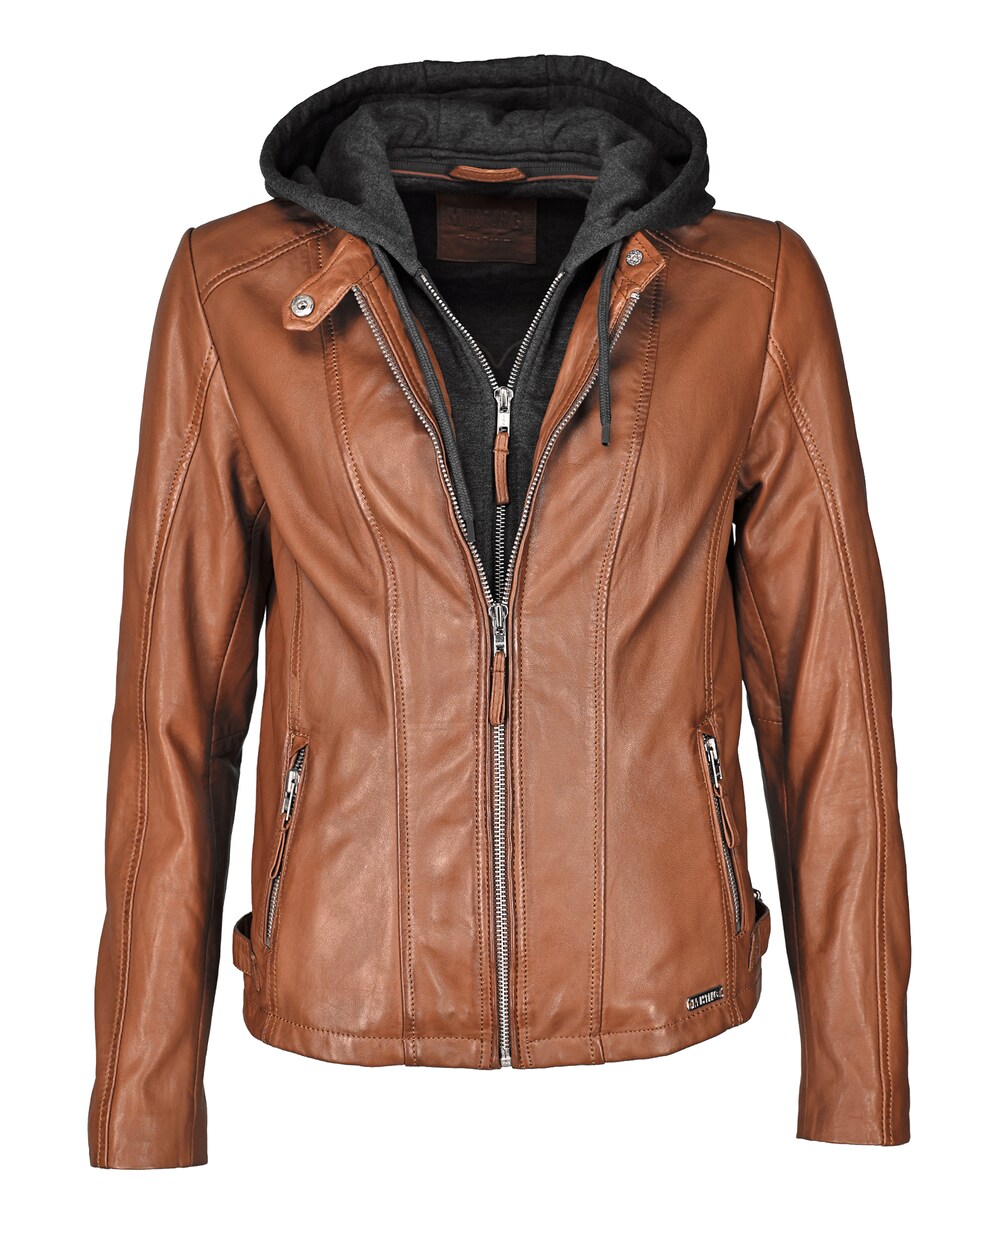 Межсезонная куртка MUSTANG, коричневый межсезонная куртка mustang ryana коричневый